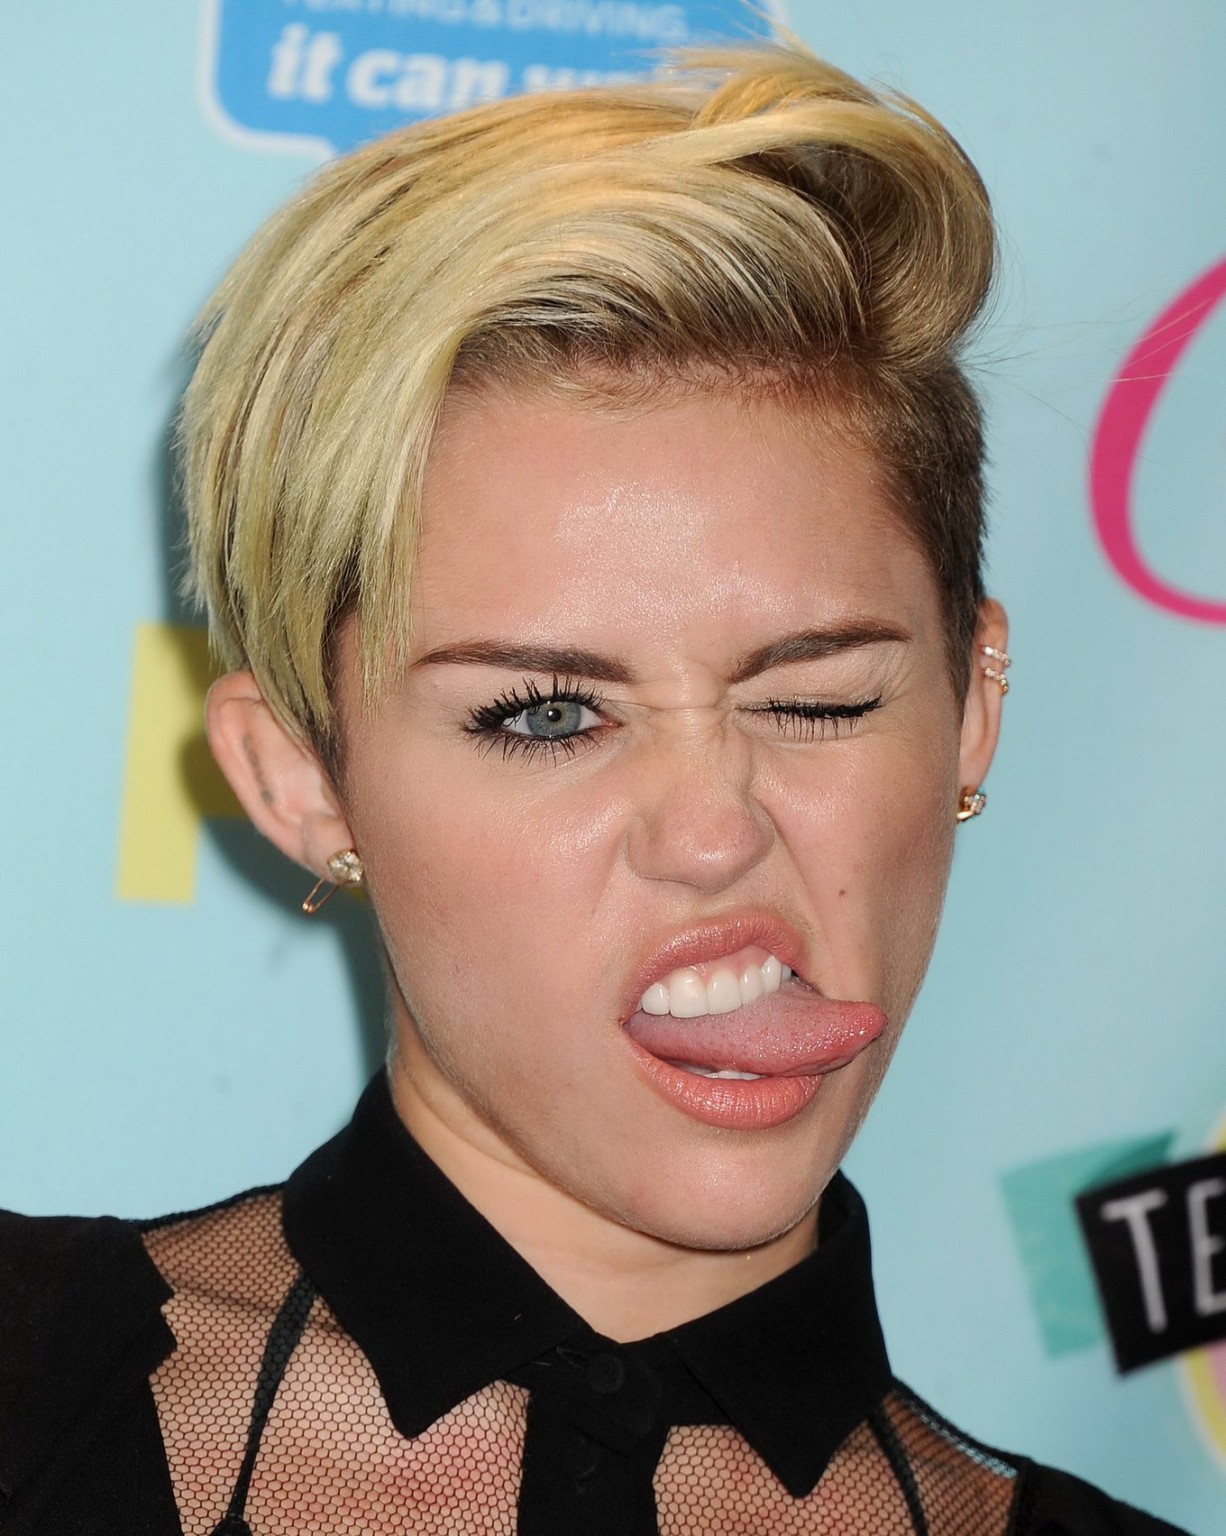 Miley cyrus indossa reggiseno in pelle nera e gonna mikro al 2013 teen choice awards
 #75221920